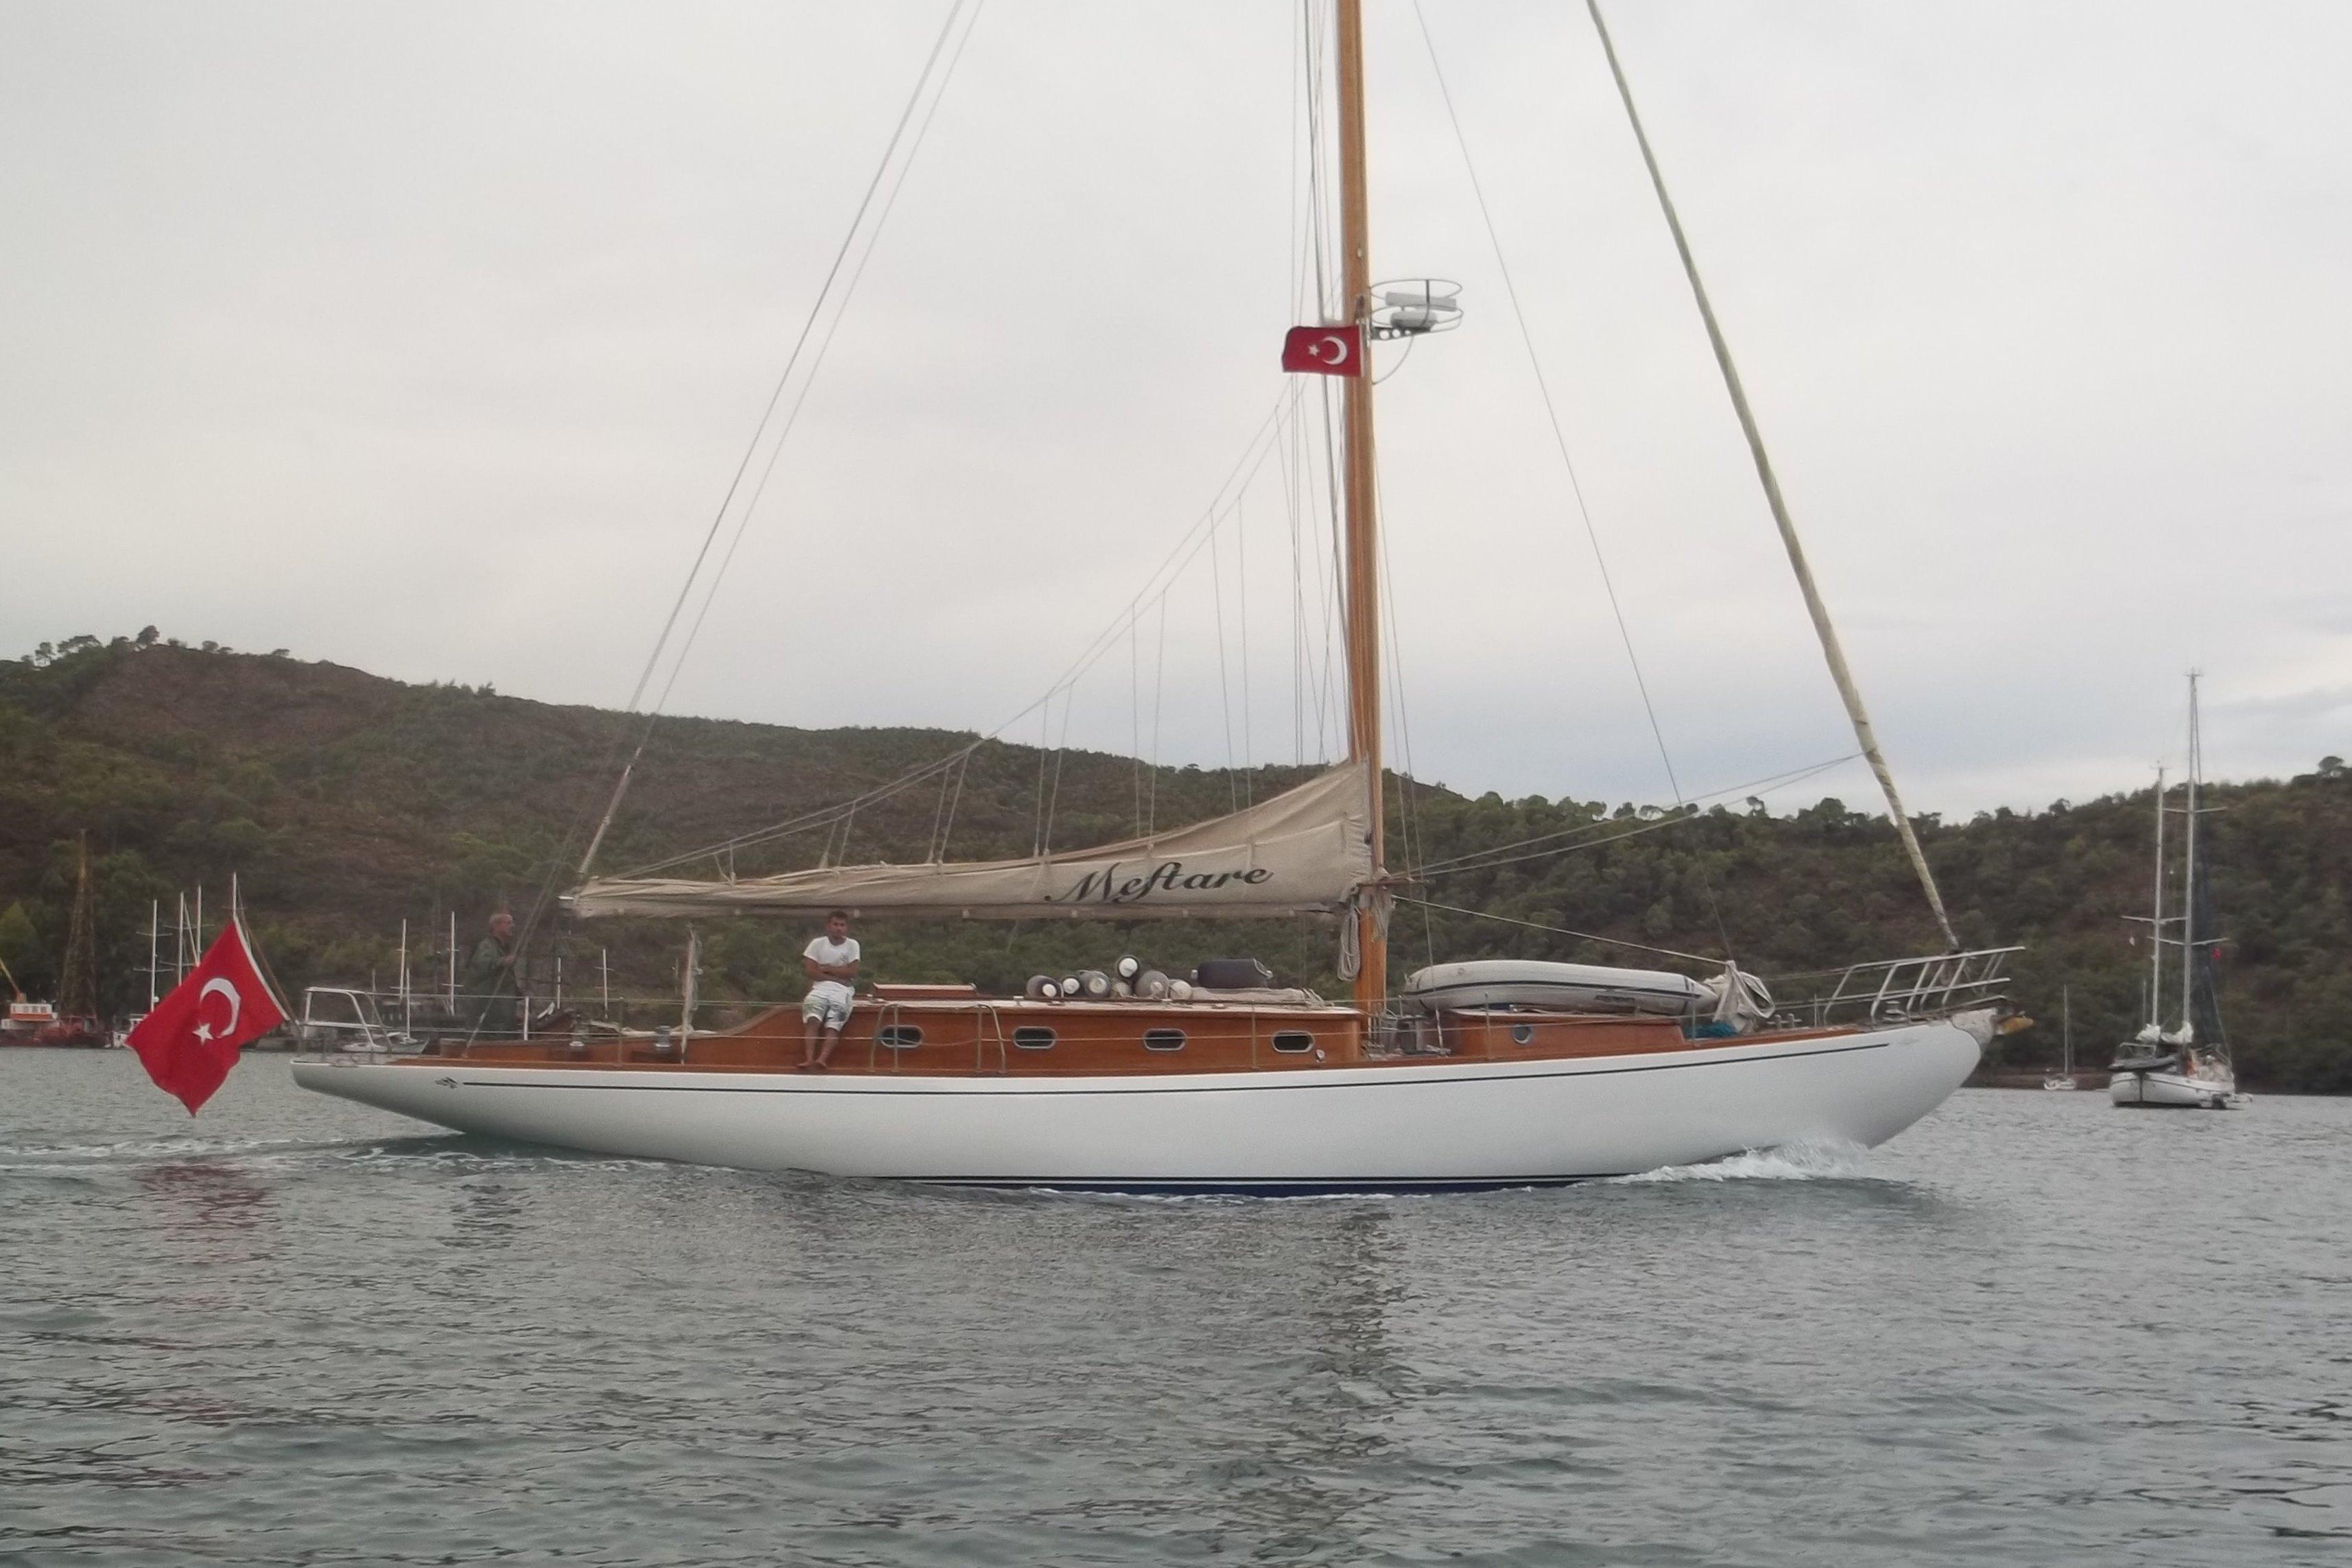 2007 Classic Sailing Yacht